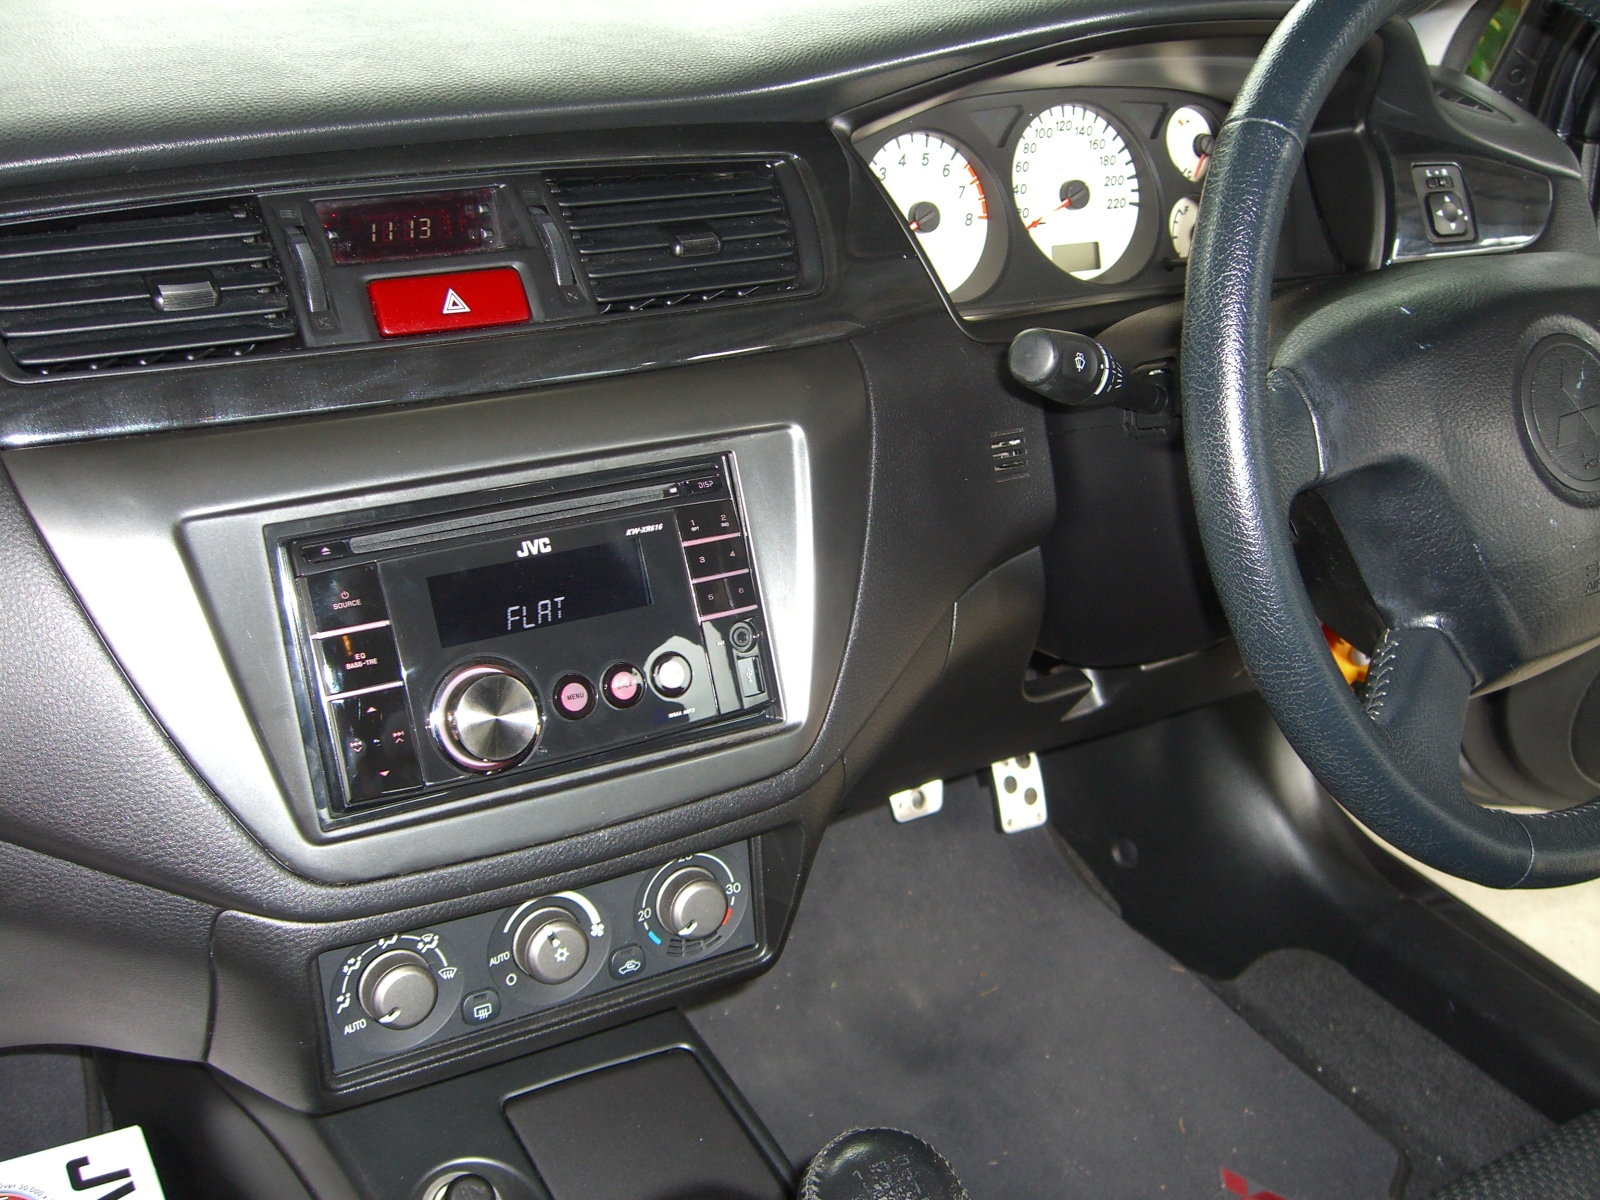 Mitsubishi Lancer 2008 JVC unit with USB, ipod control